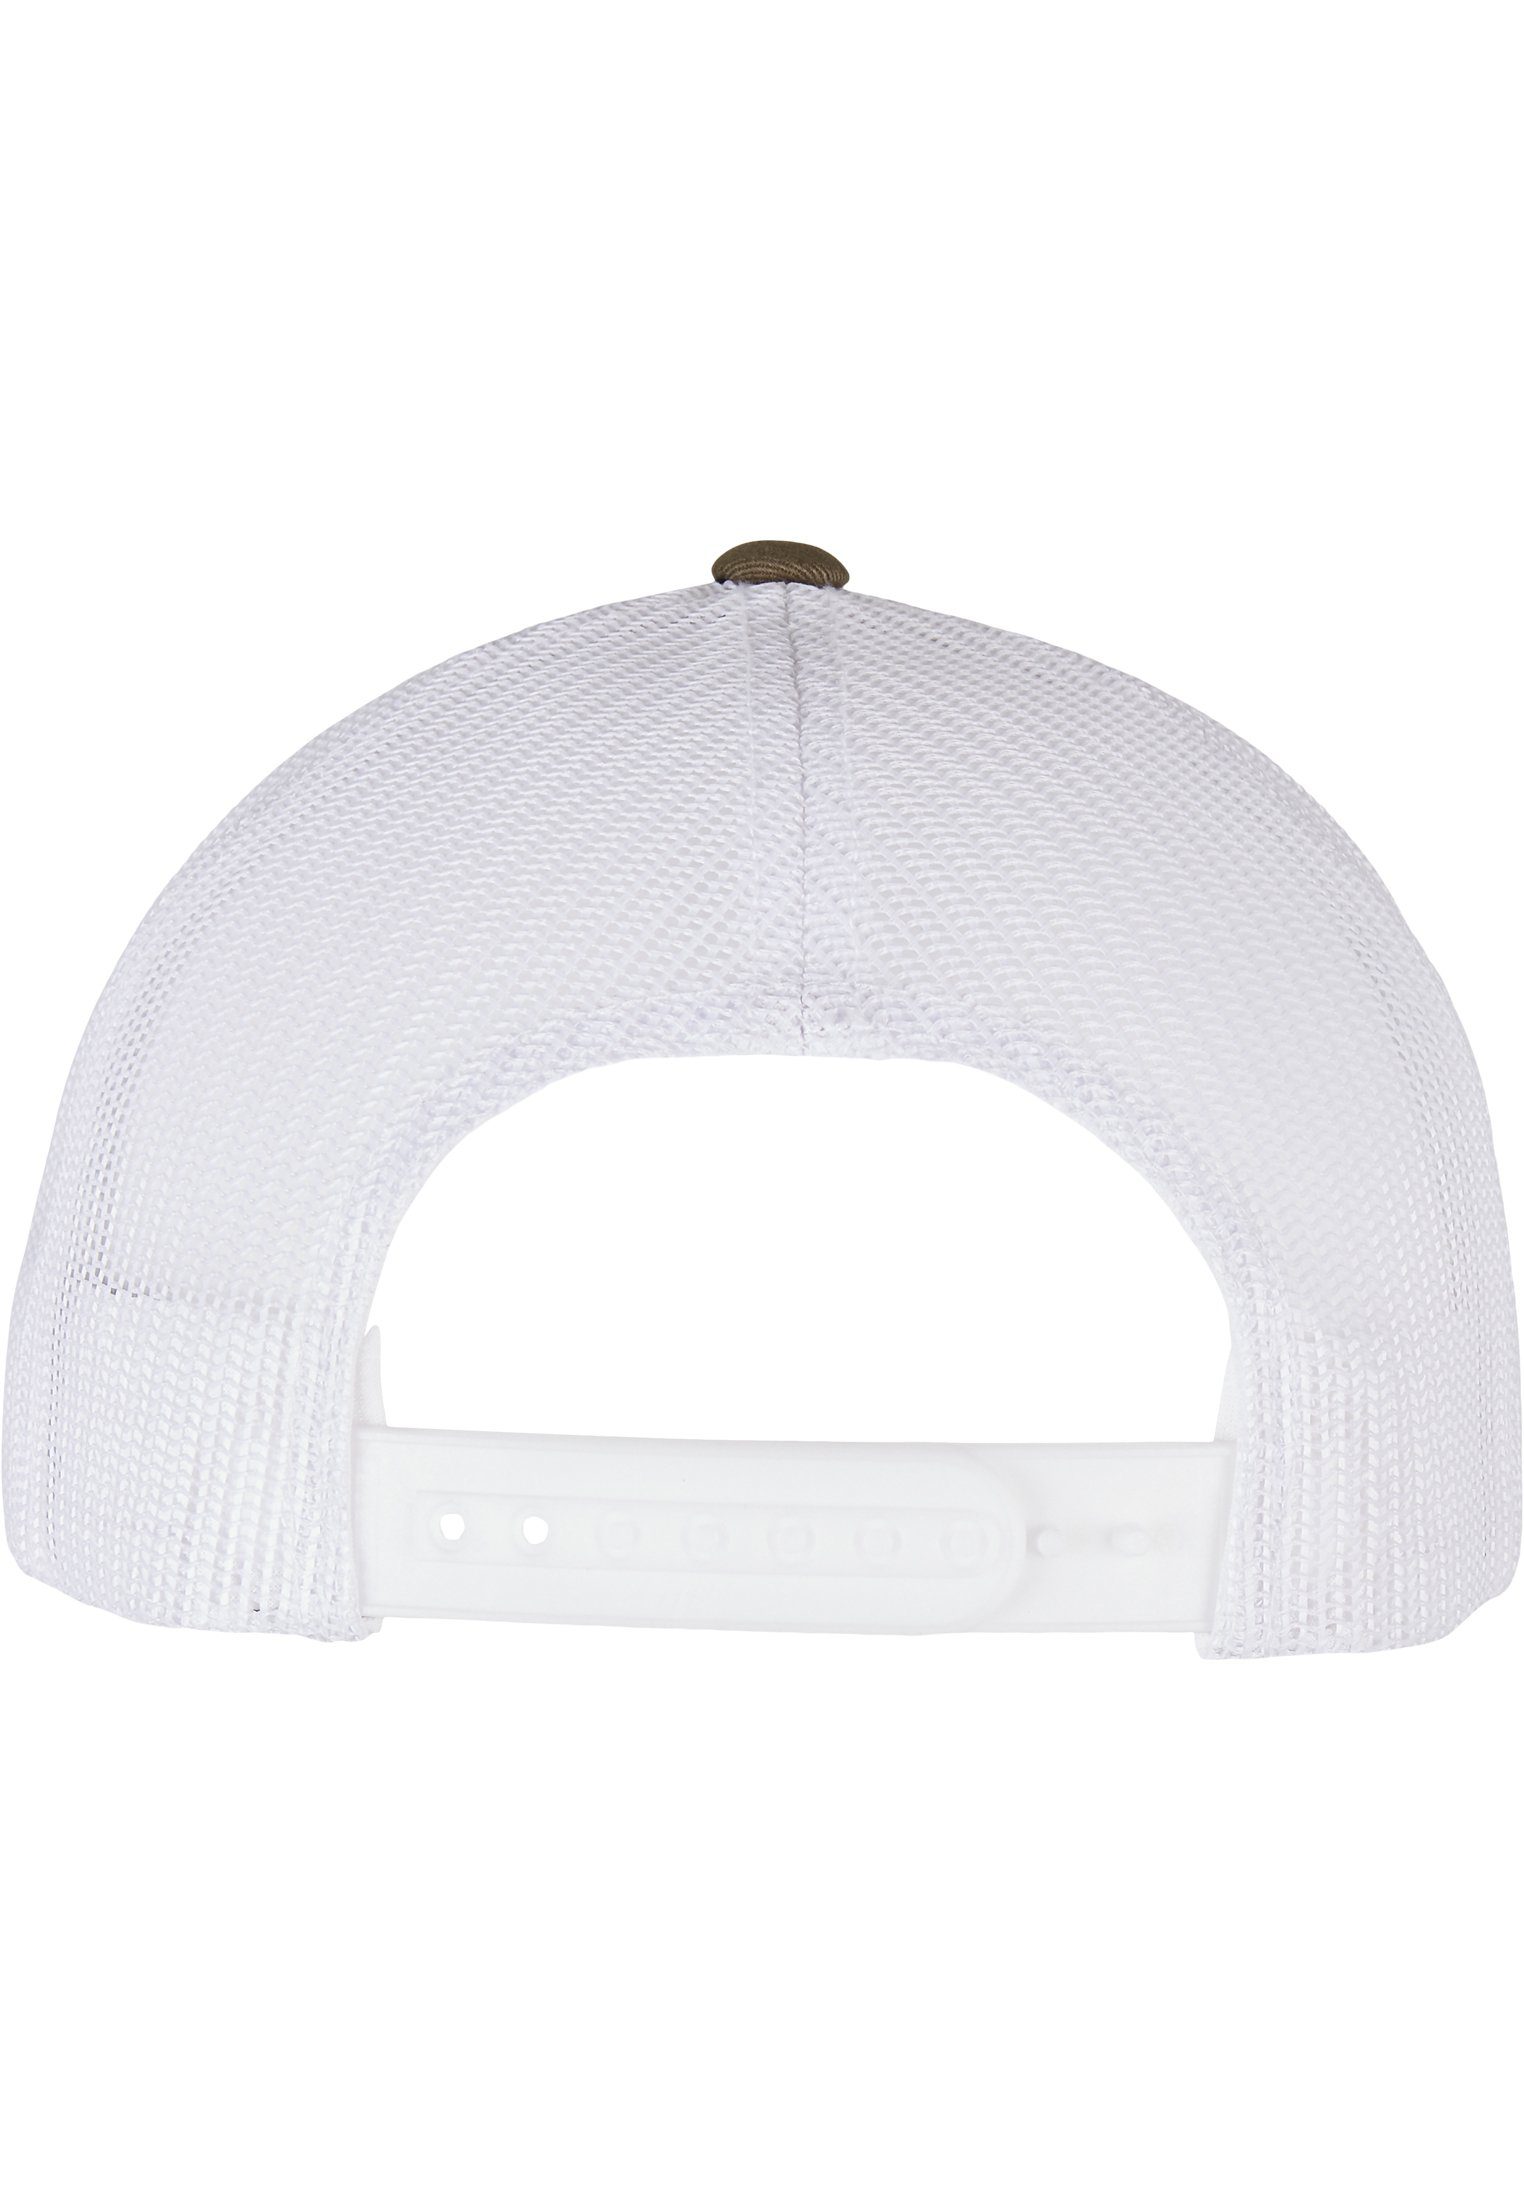 Flexfit Flex Cap Caps CLASSICS olive/white 2-TONE RECYCLED CAP RETRO YP TRUCKER